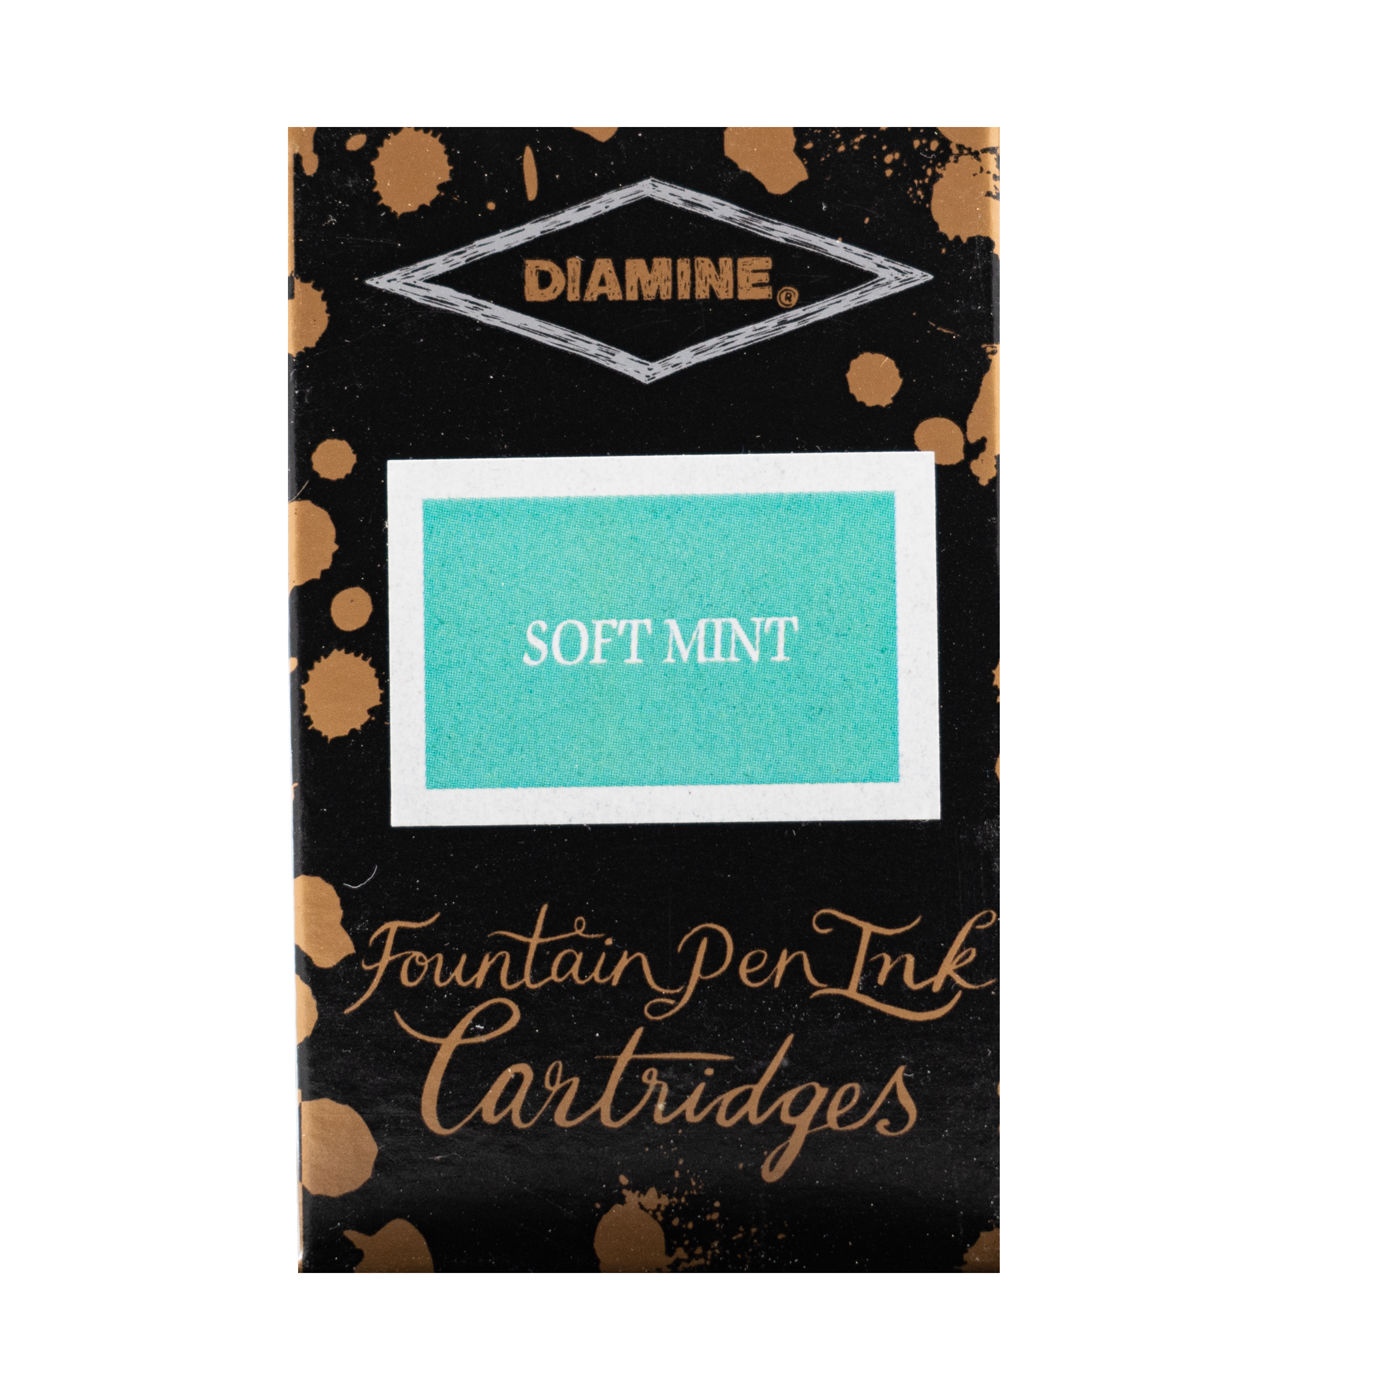 Diamine Soft Mint